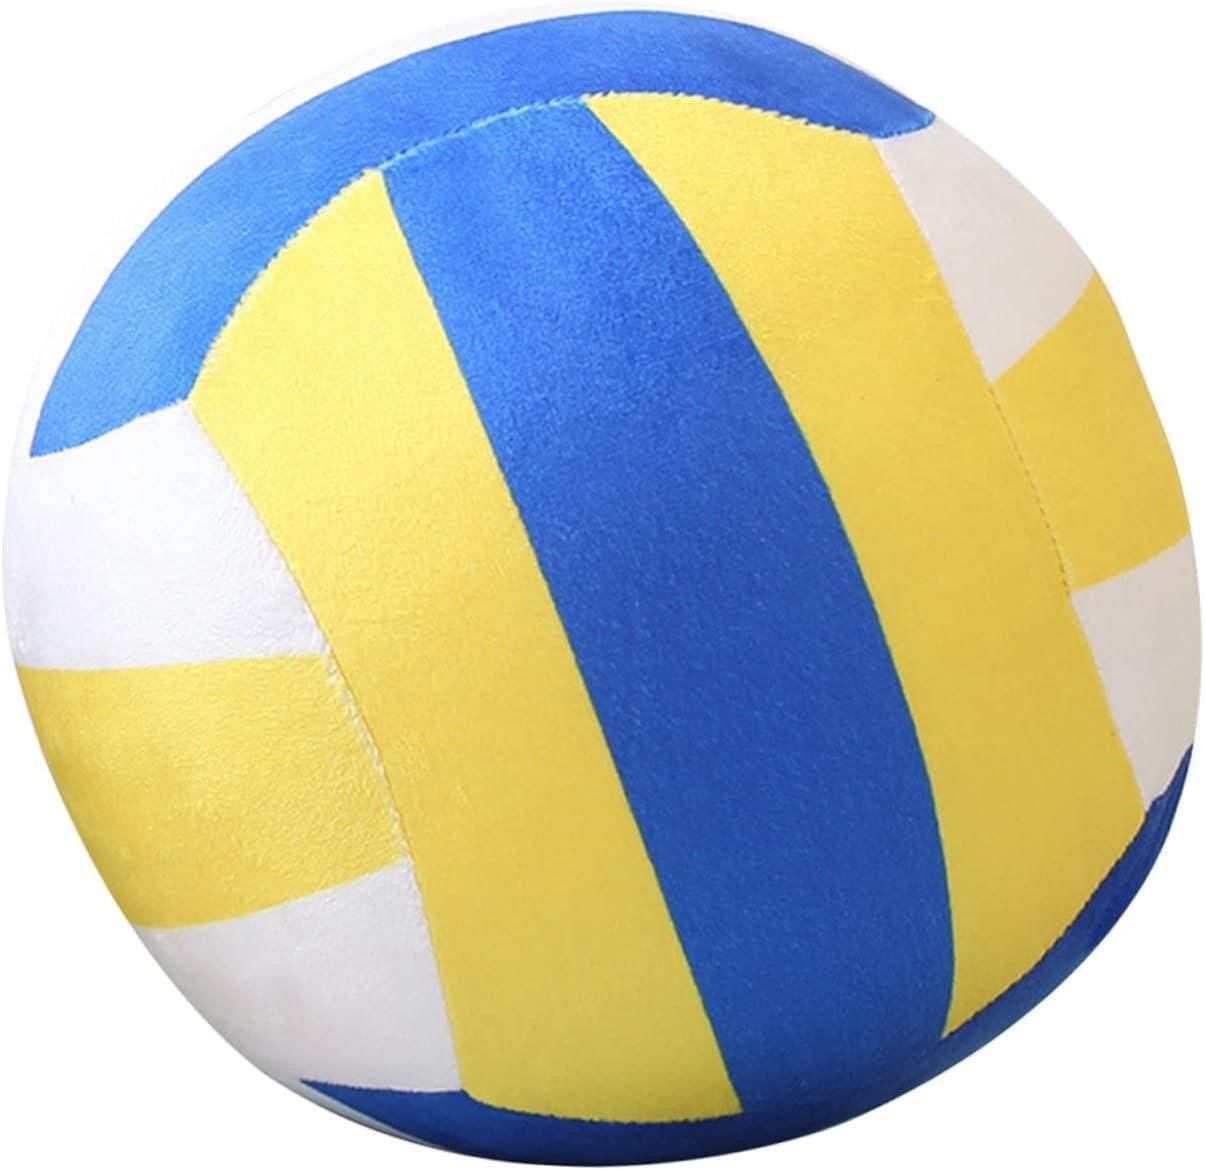 SEALED- Volleyball Plush x2